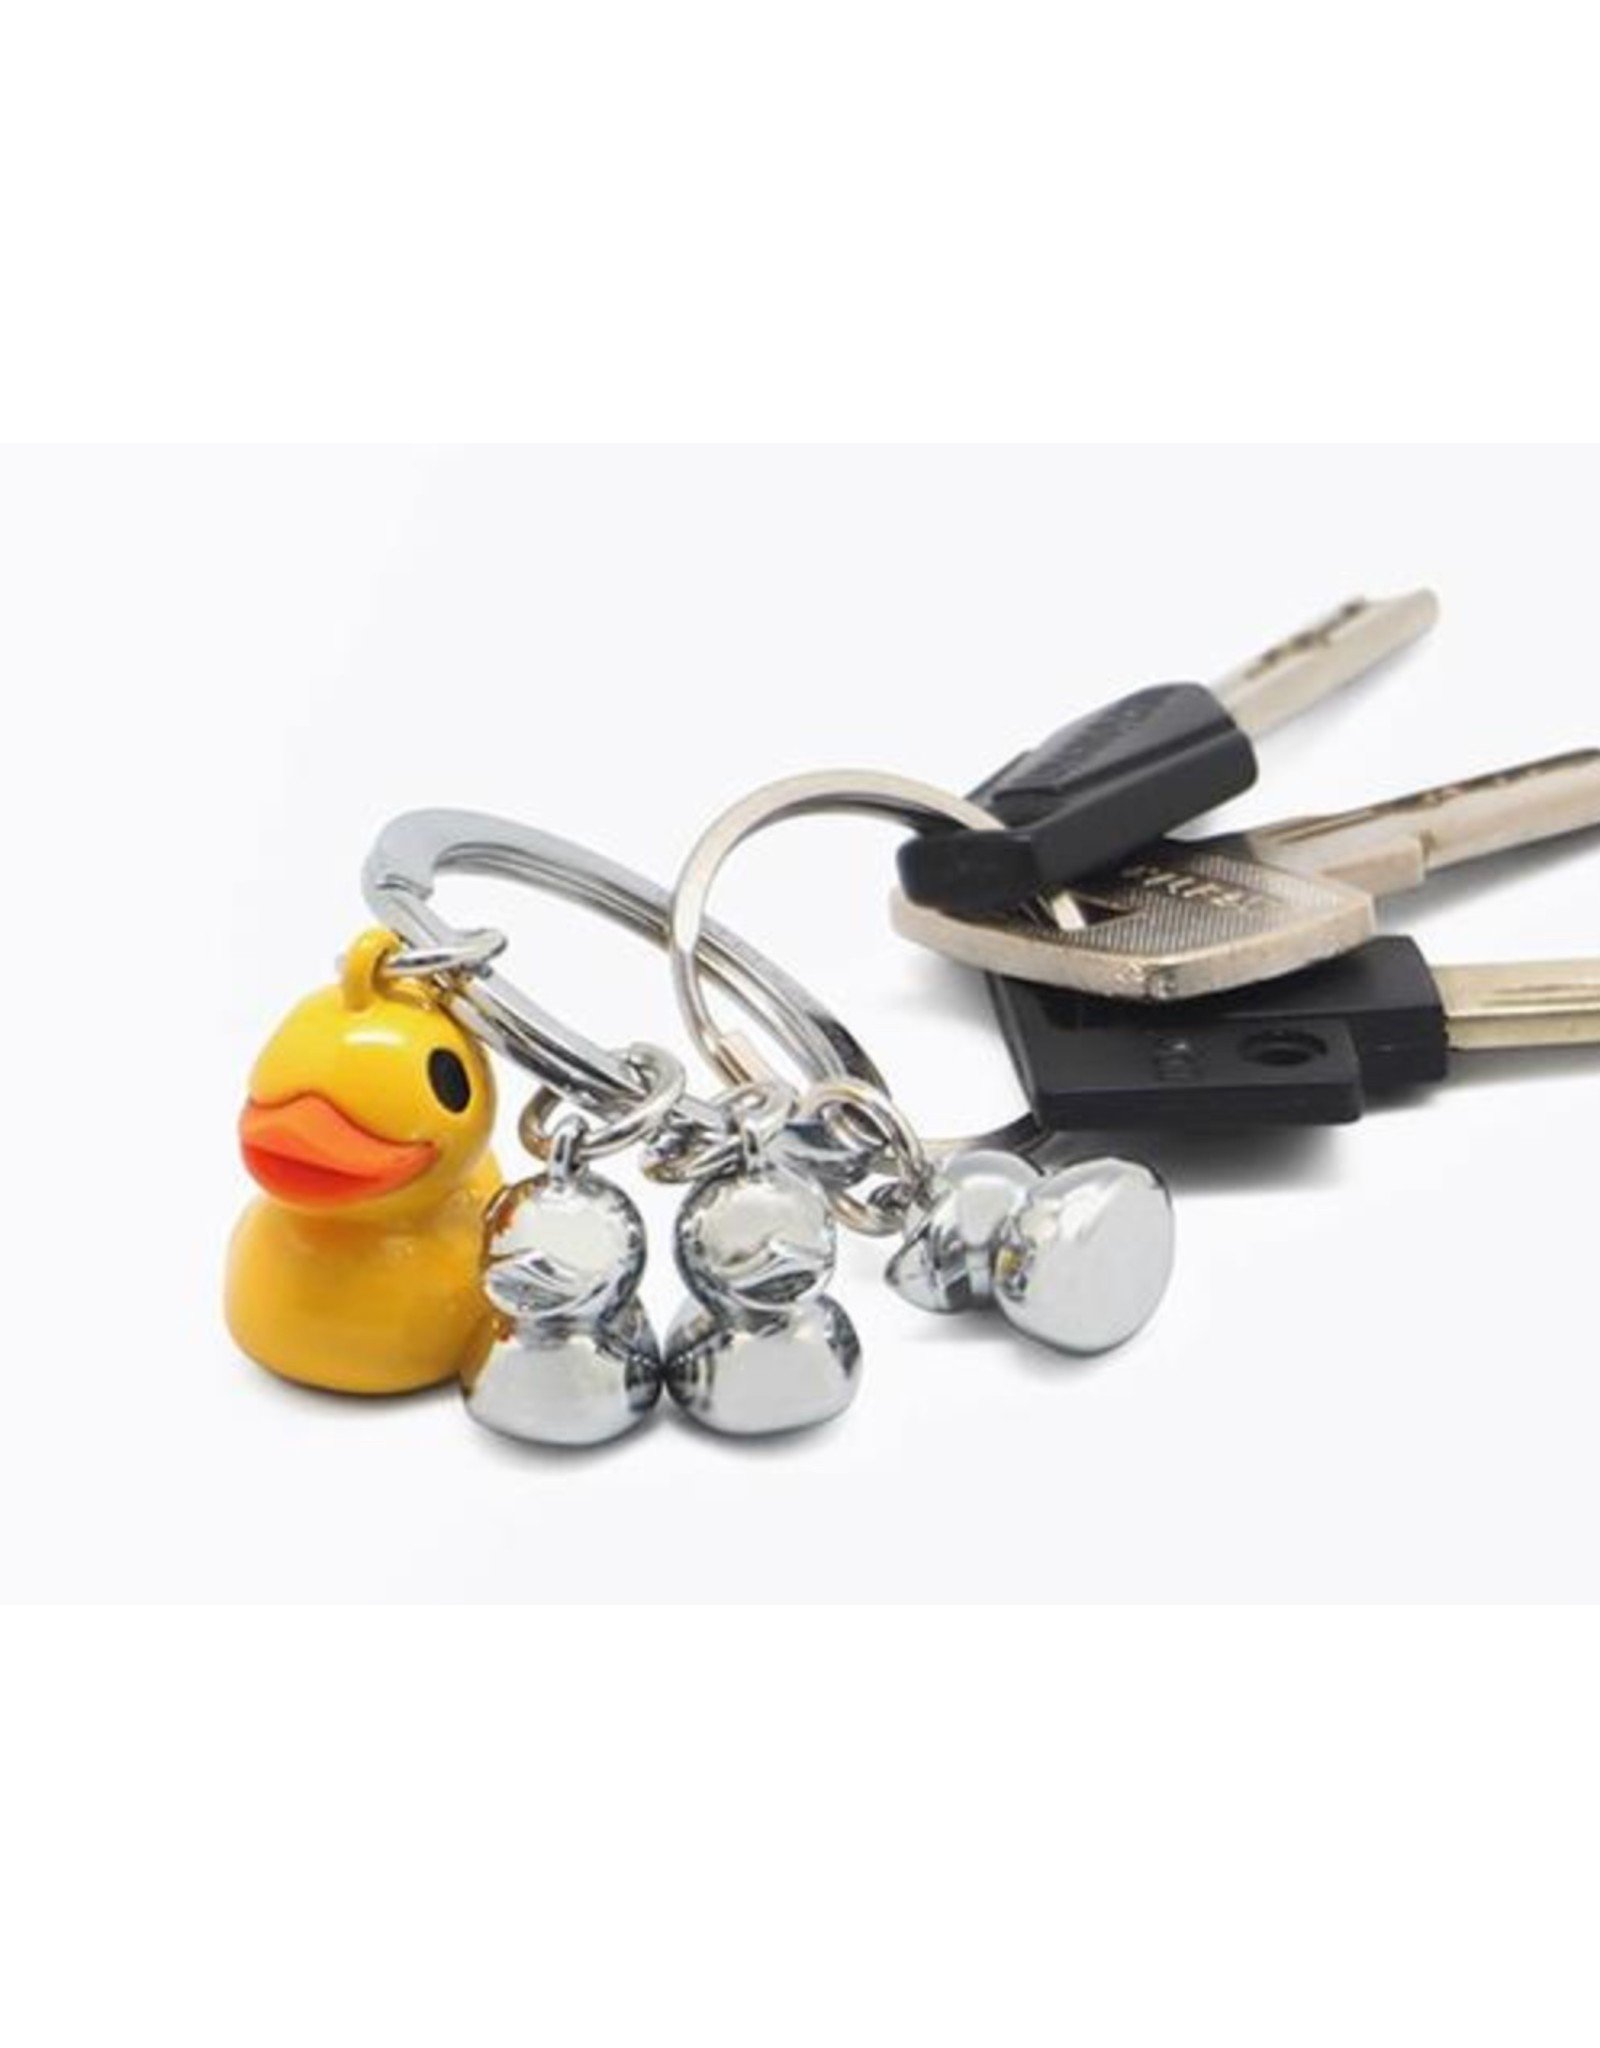 Rubber Duck Family Key Ring